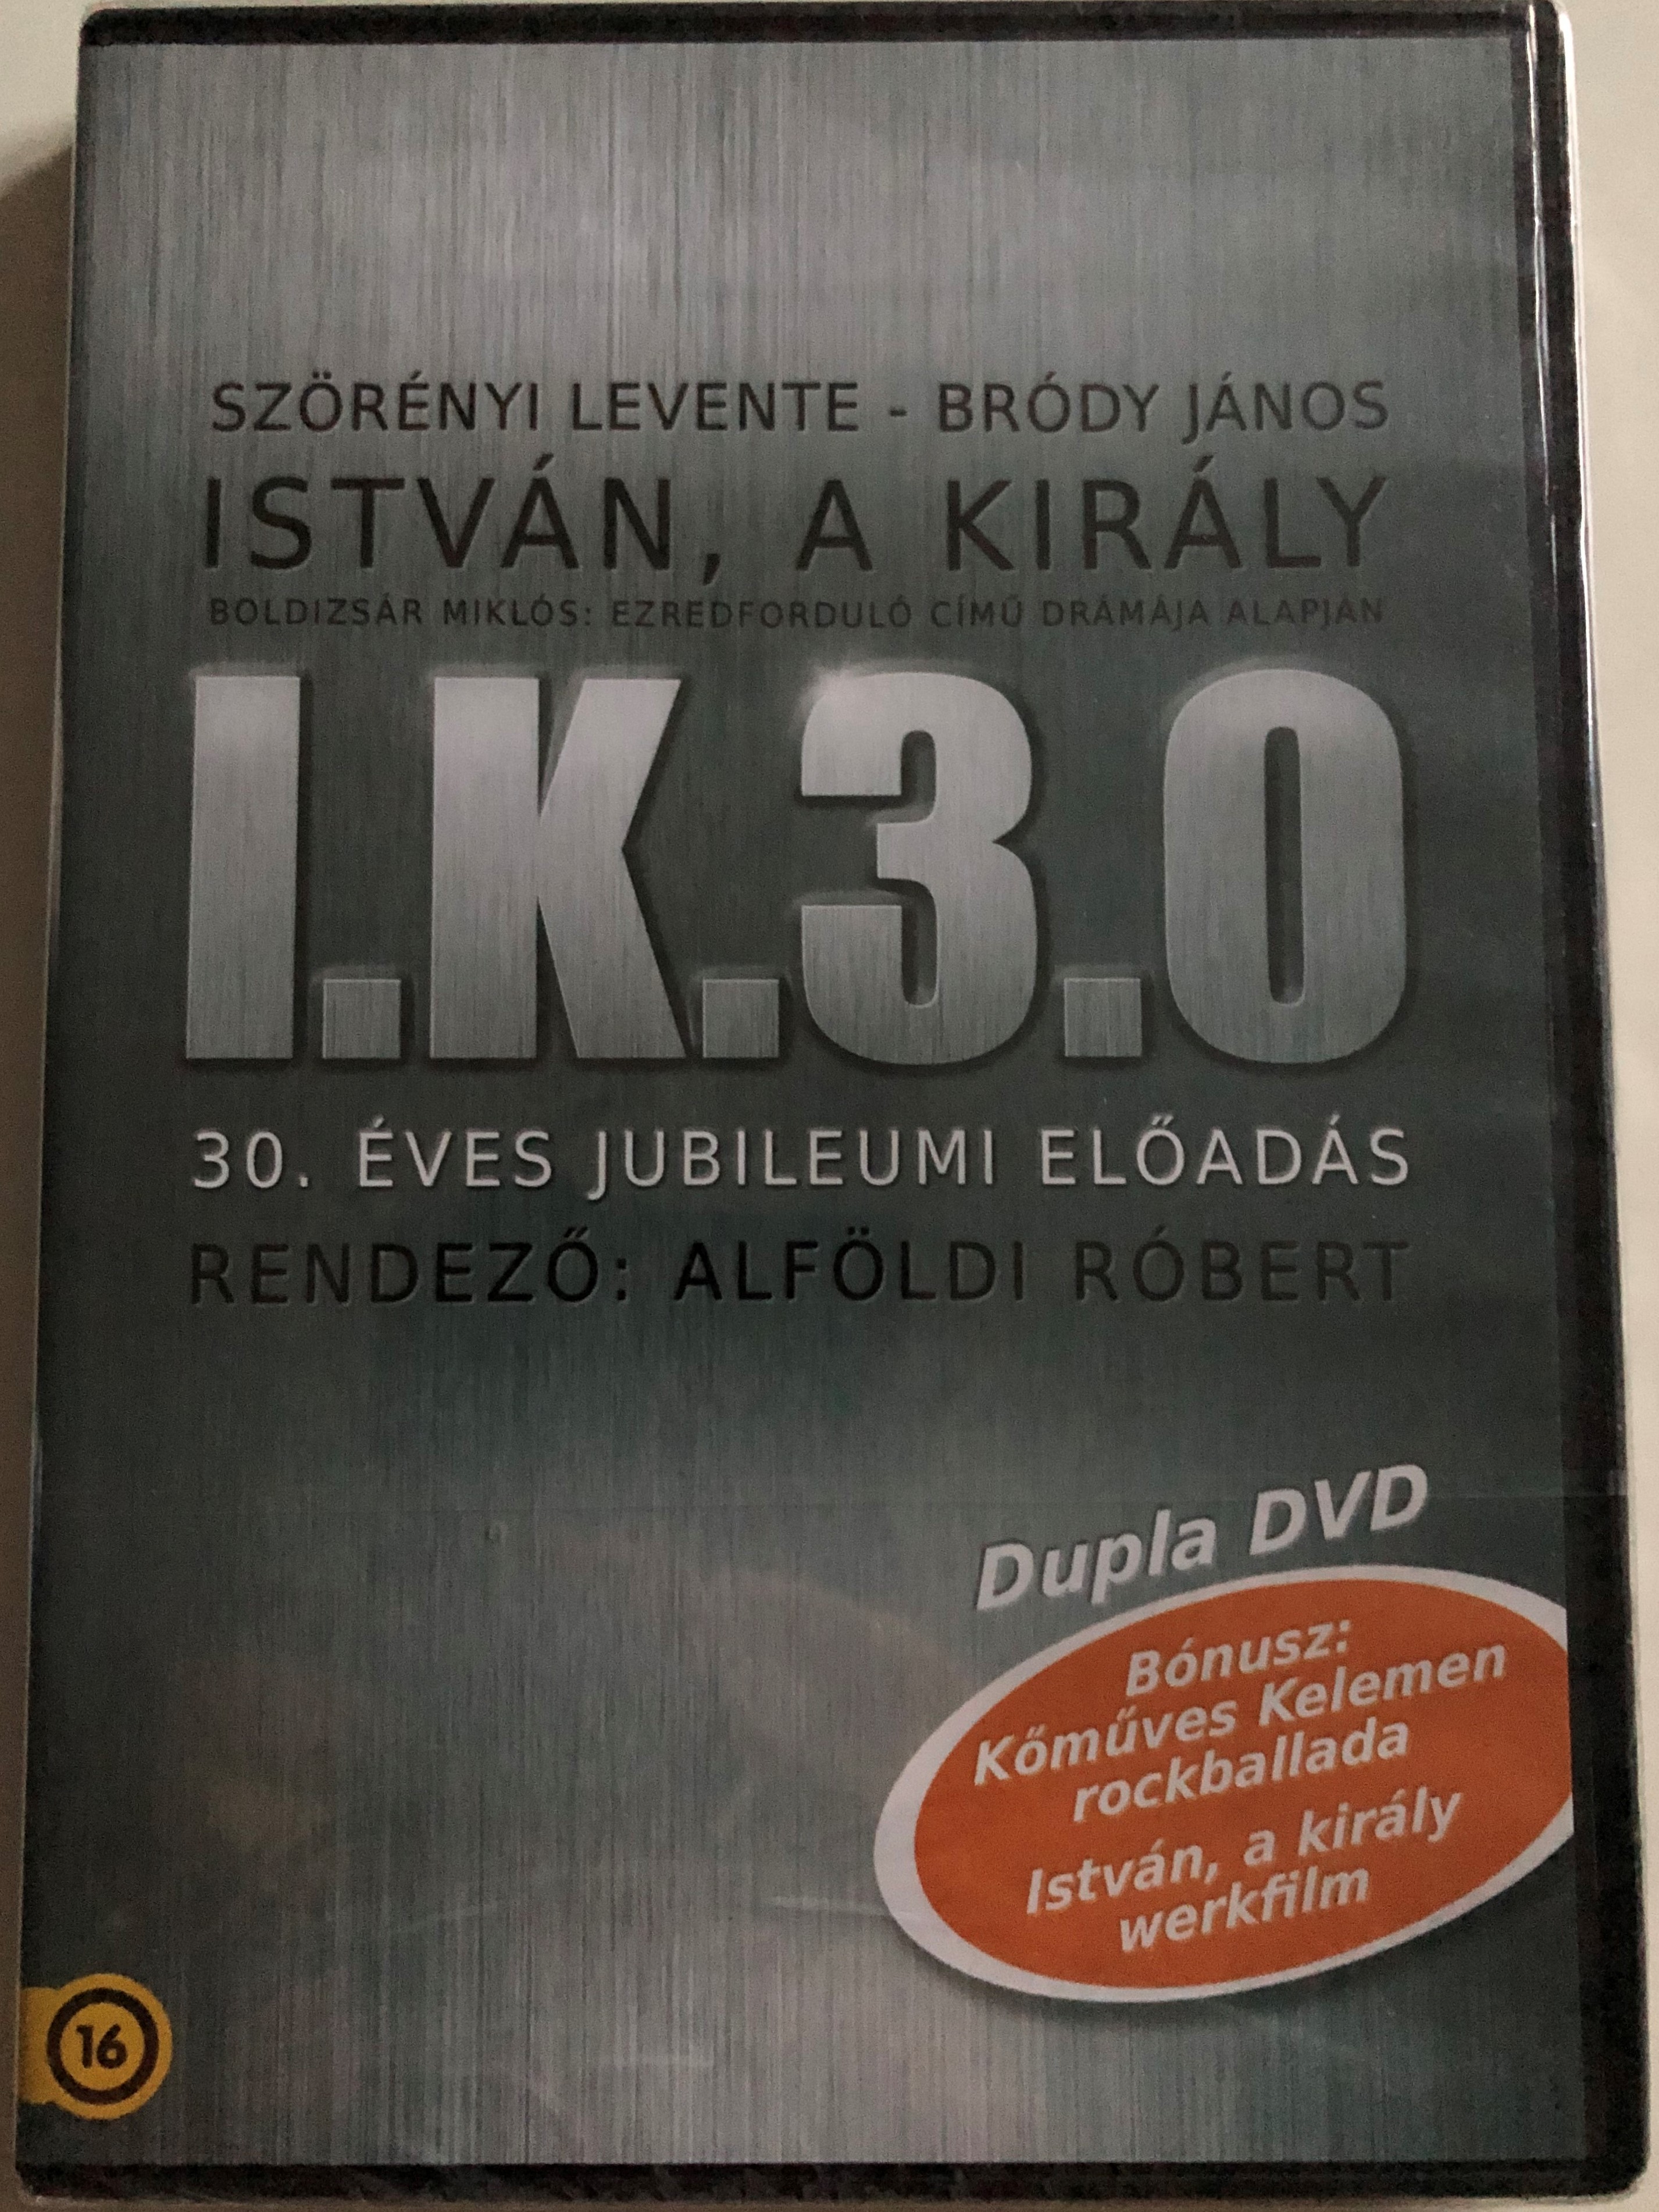 i.k.-3.0-istv-n-a-kir-ly-dvd-2013-stephen-the-king-30th-anniversary-edition-directed-by-r-bert-alf-ldi-2-dvd-with-extra-k-m-ves-kelemen-rock-ballad-sz-r-nyi-levente-br-dy-j-nos-sarkadi-imre-iv-nka-csaba-1-.jpg